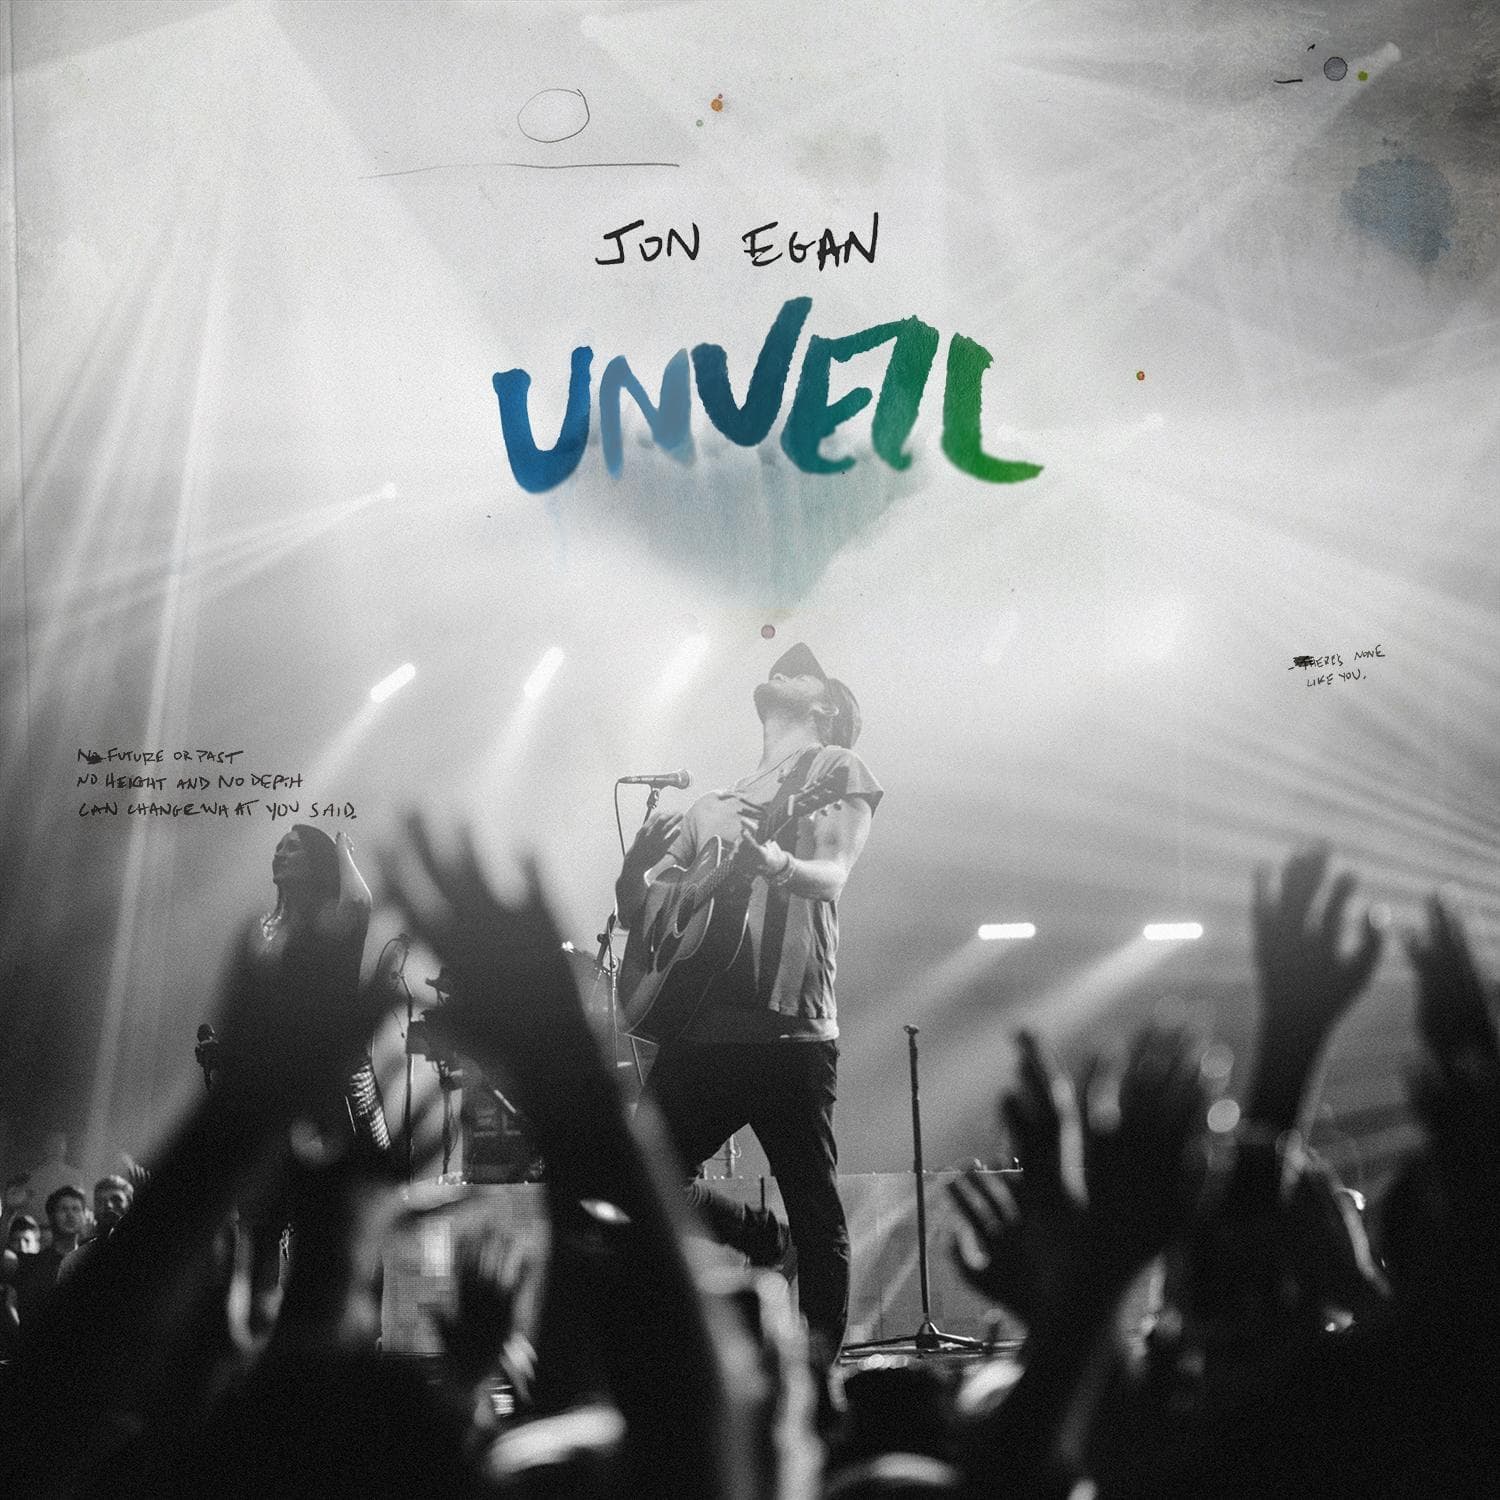 Unveil (Live) - Jon Egan